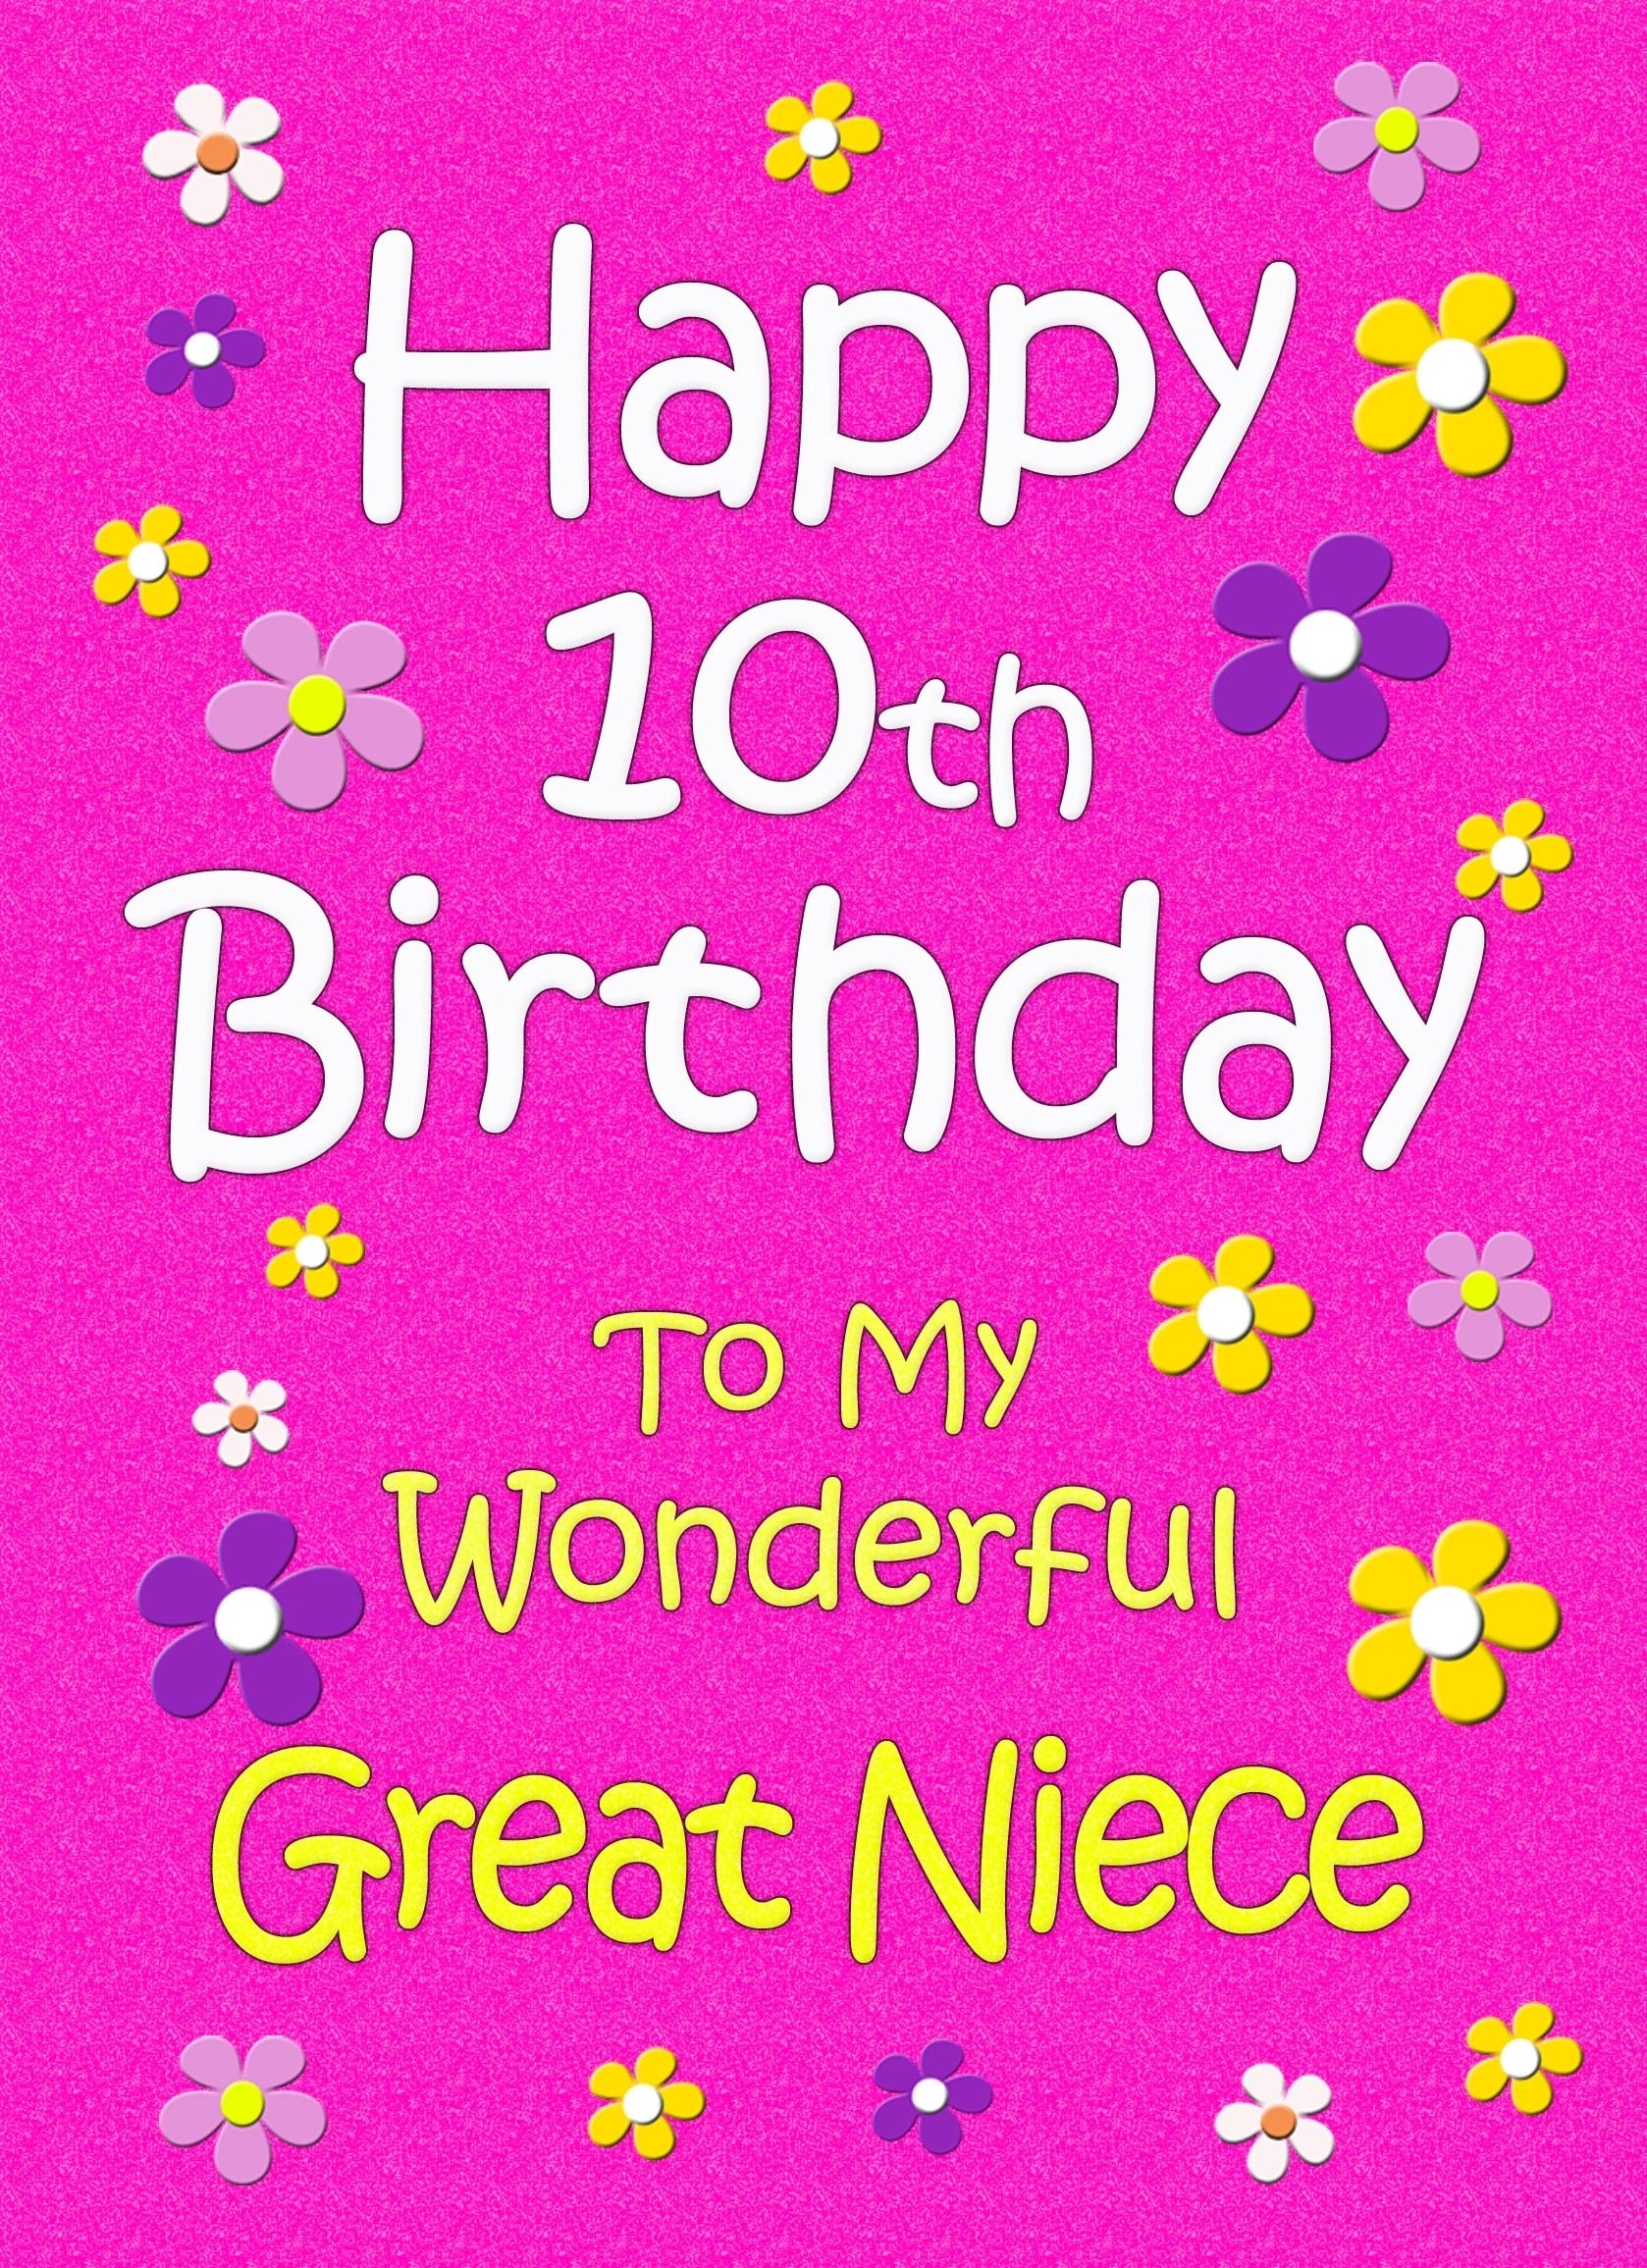 Great Niece 10th Birthday Card (Pink)